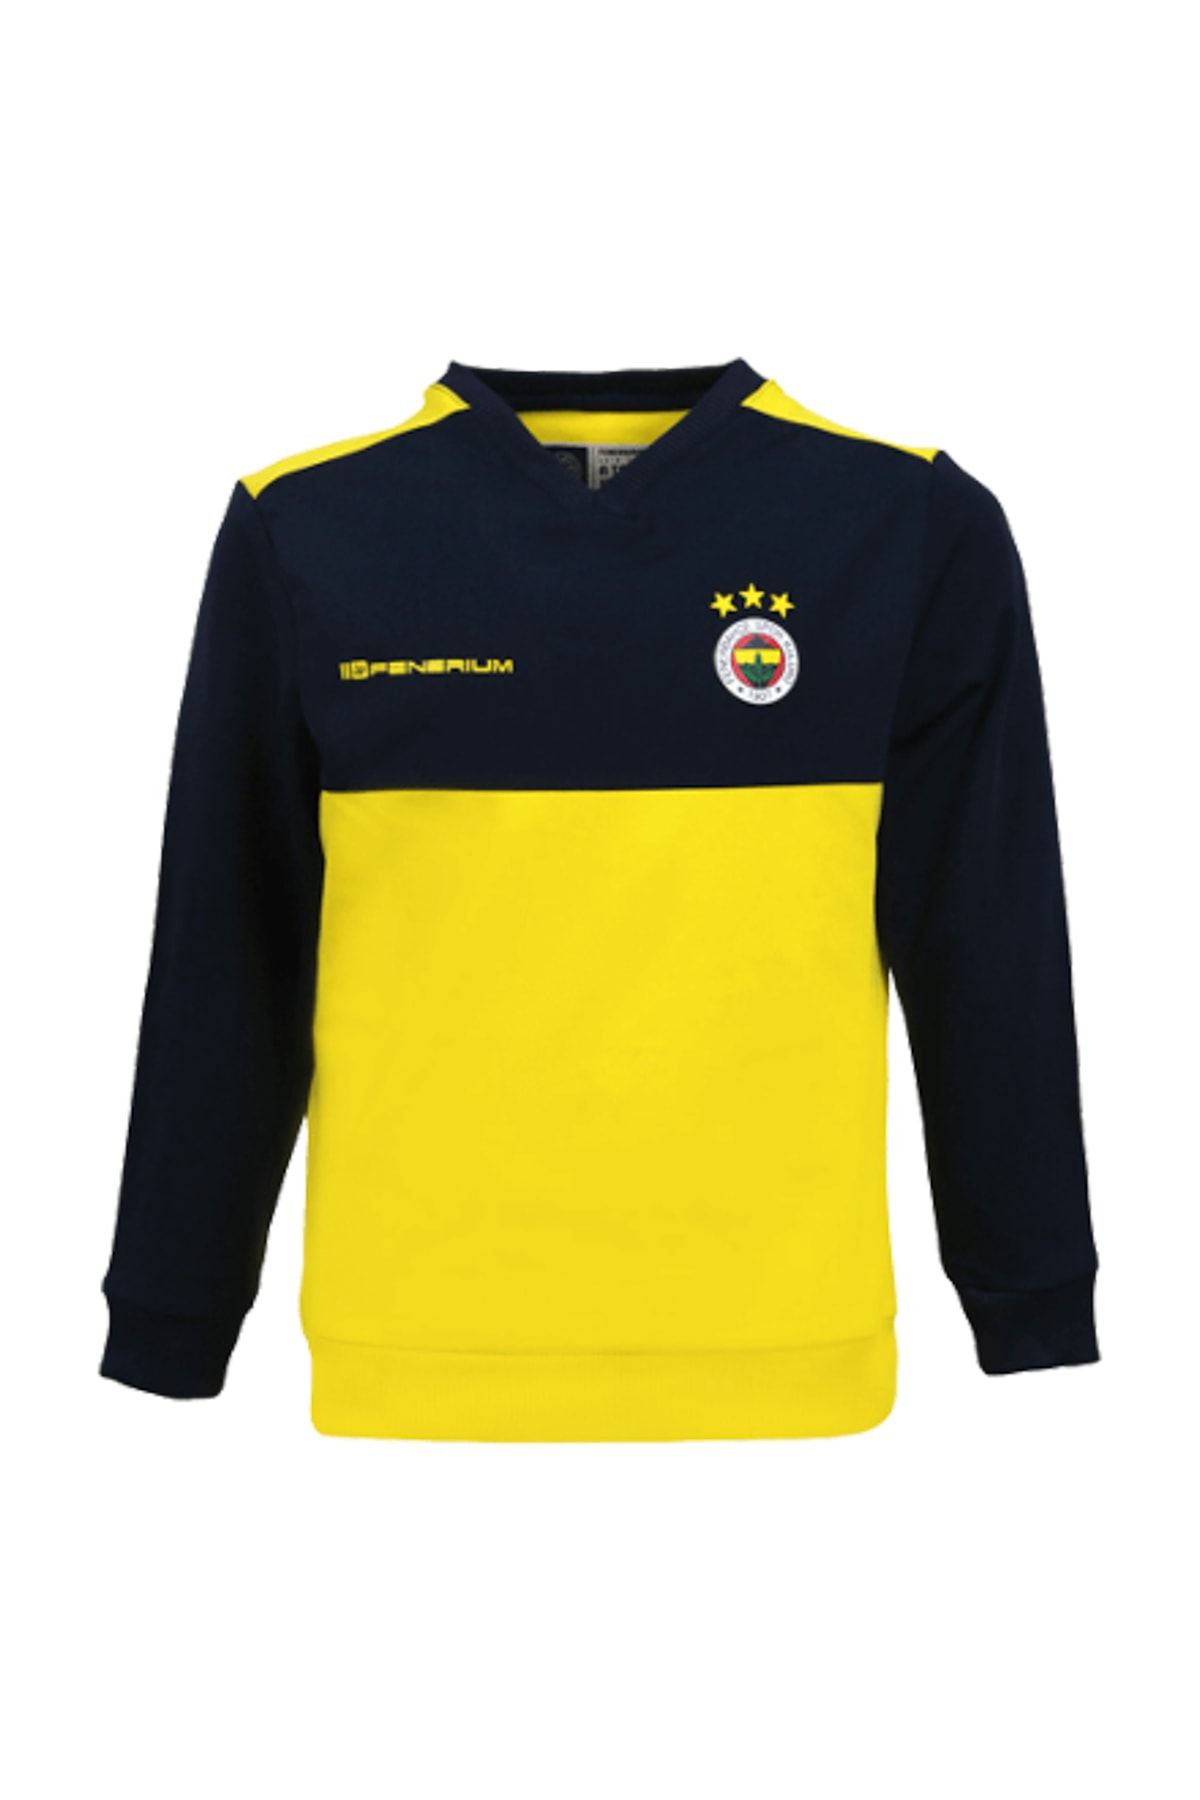 Fenerbahçe Fenerbahçe 2019/20 A Takım Futbolcu Antrenman Üstü Sweatshirt AT017C9S01